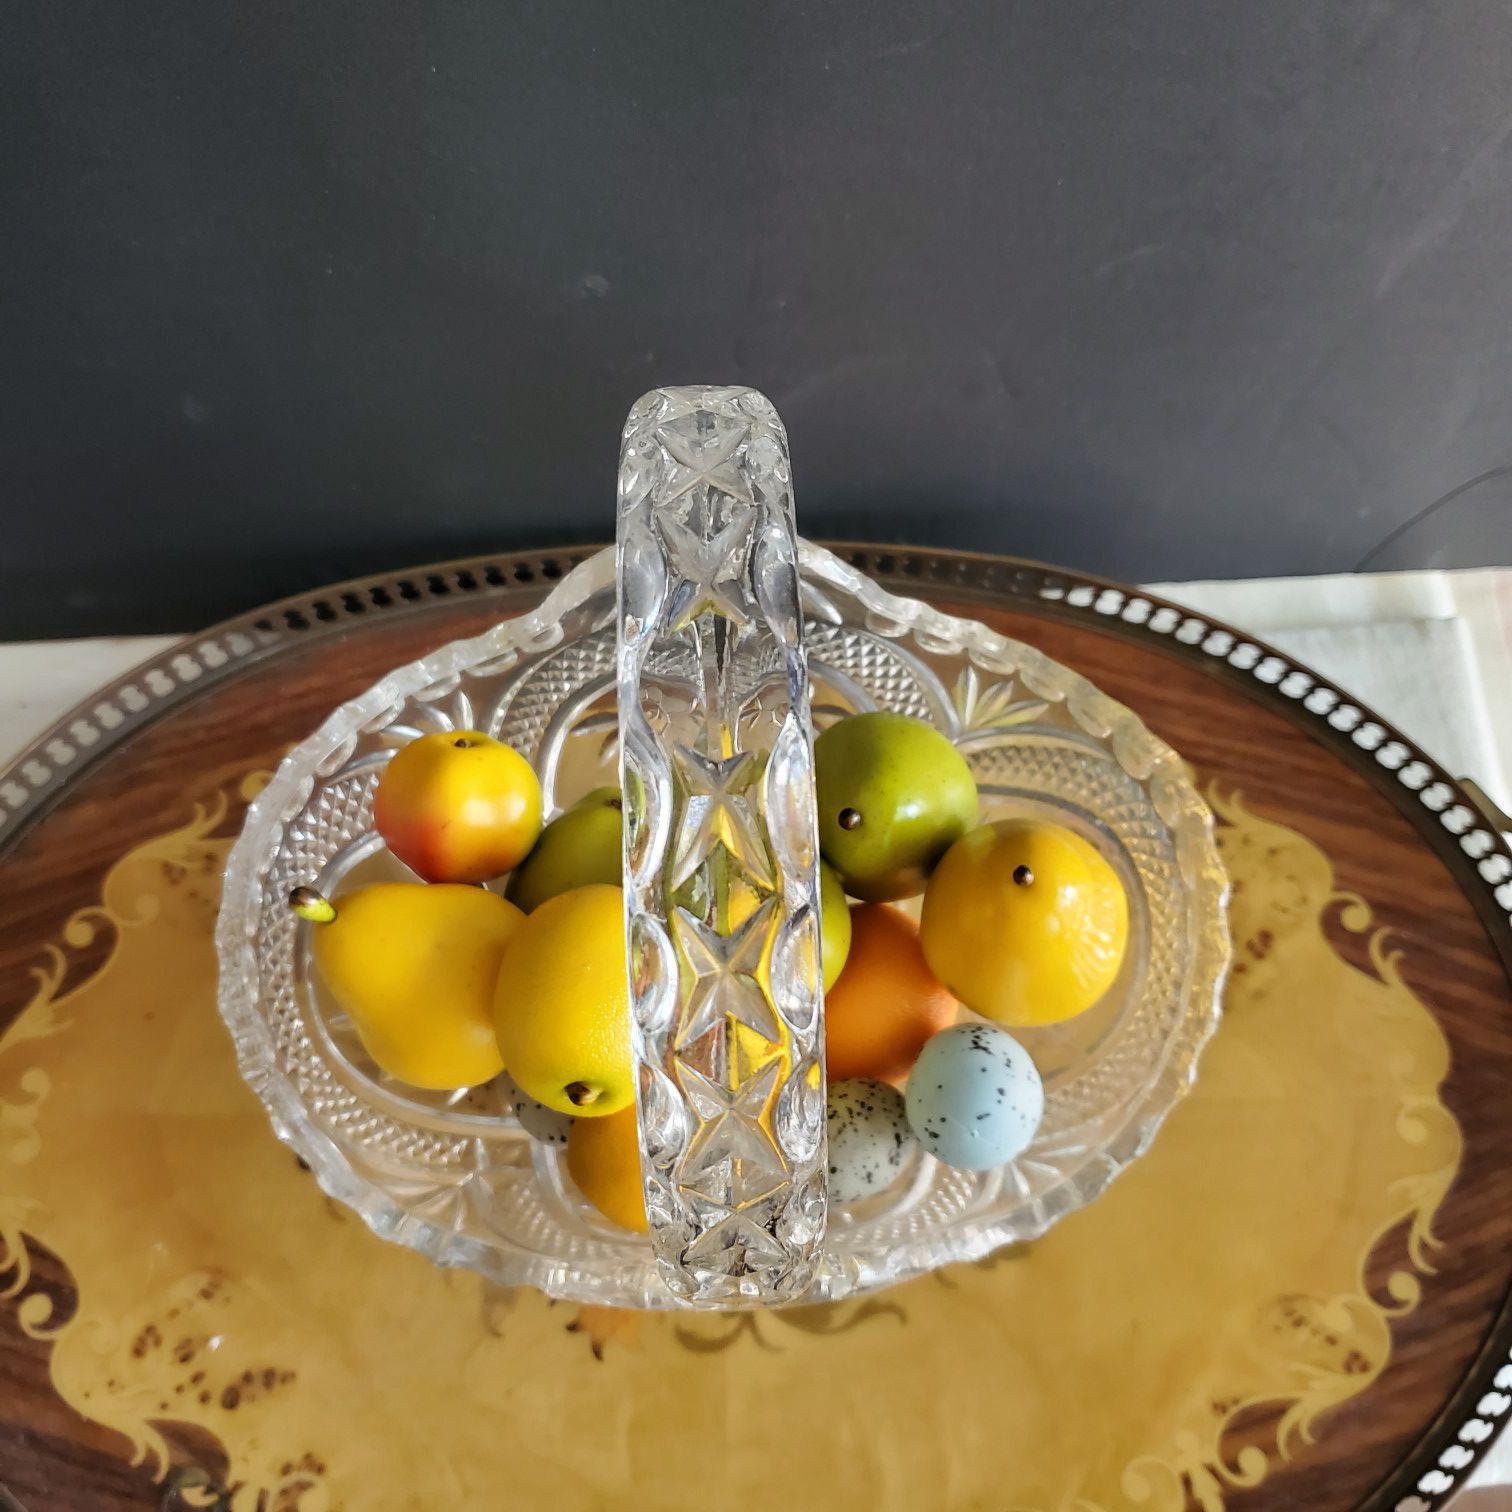 Crystal vase with fake fruits